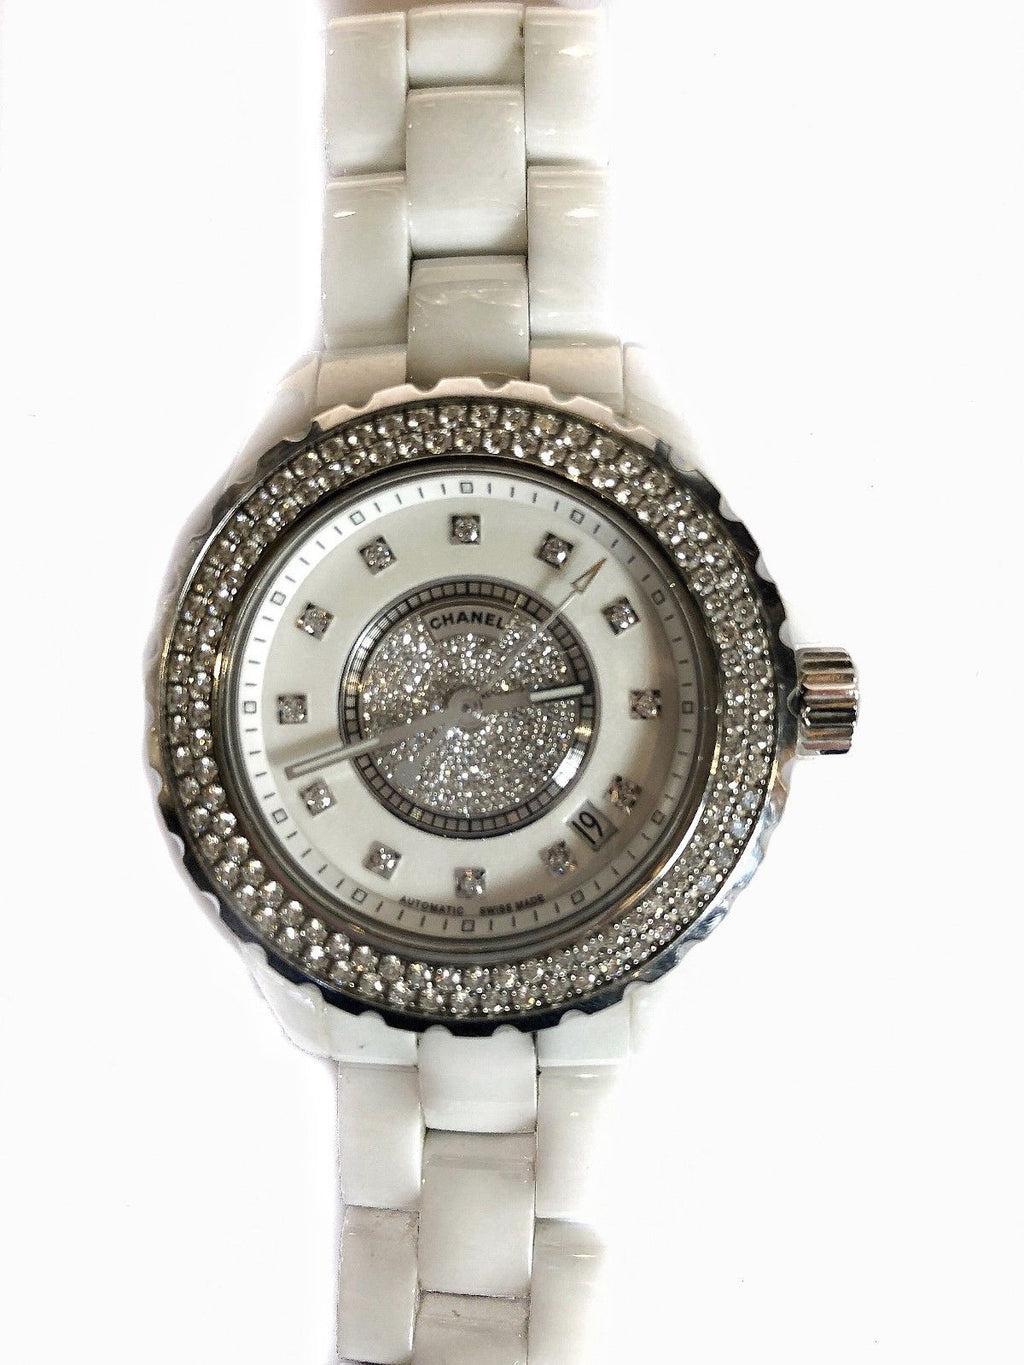 chanel wrist watch price